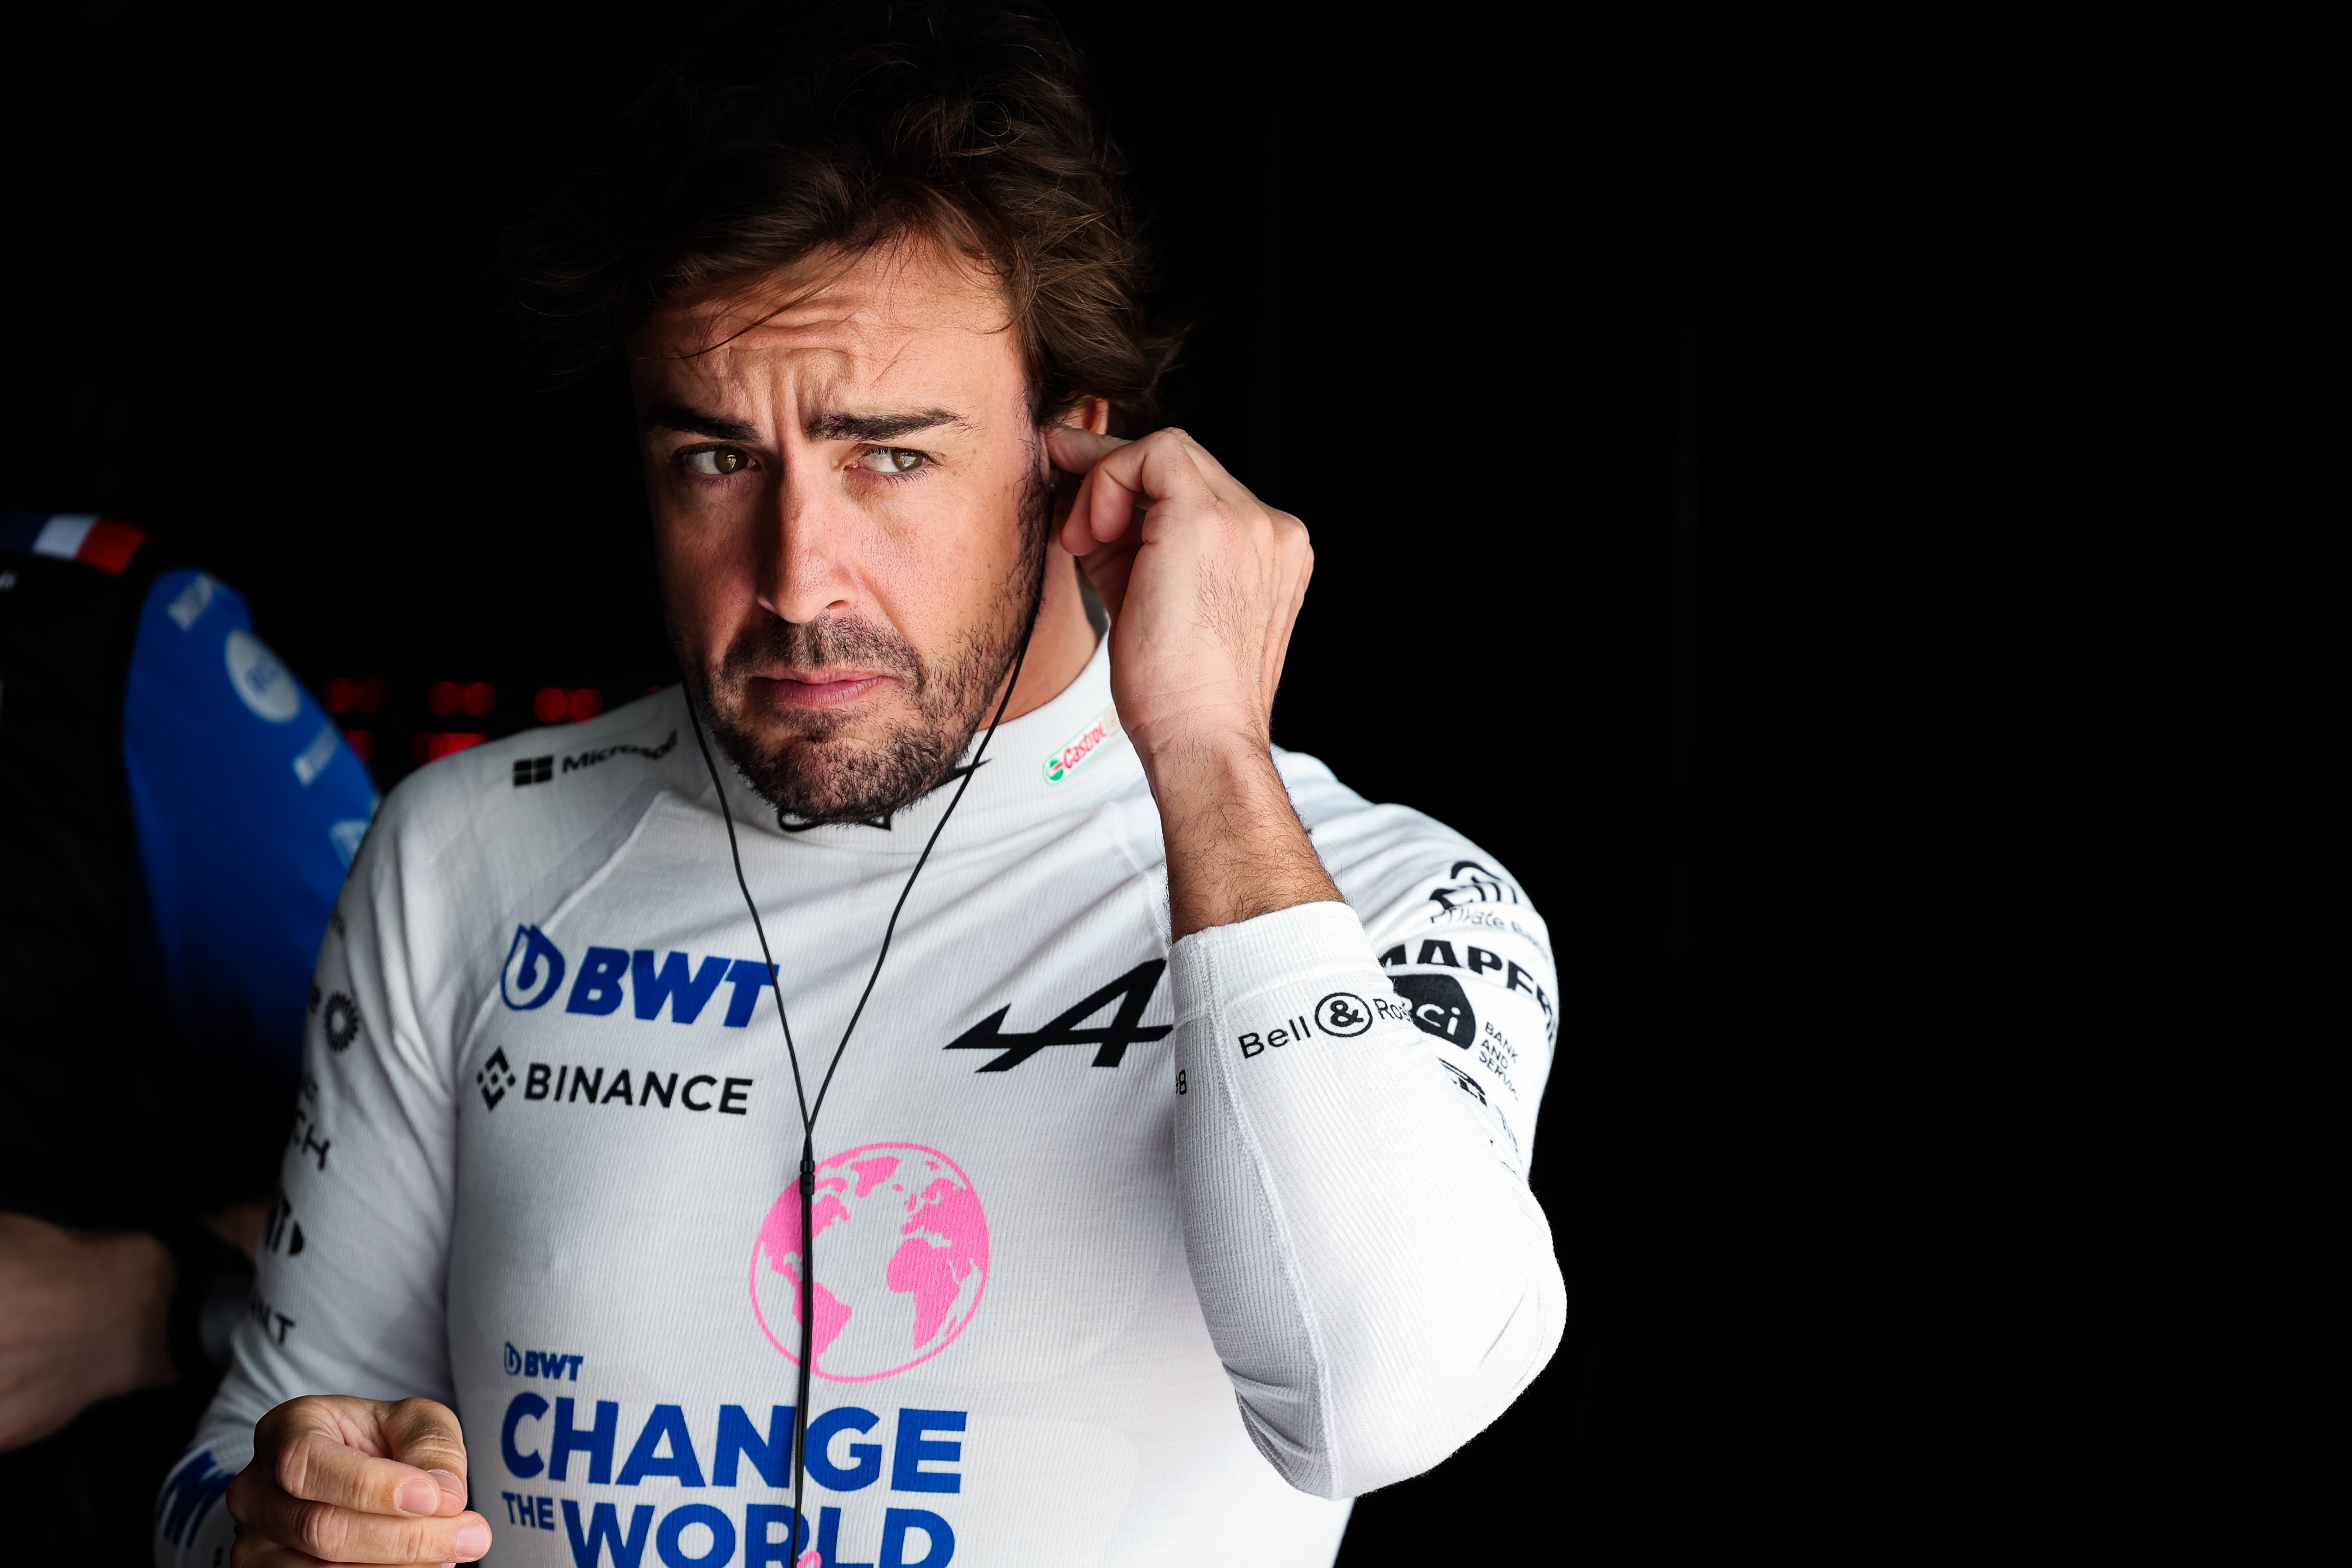 El mal perdre de Fernando Alonso que ha tret de polleguera Anglaterra